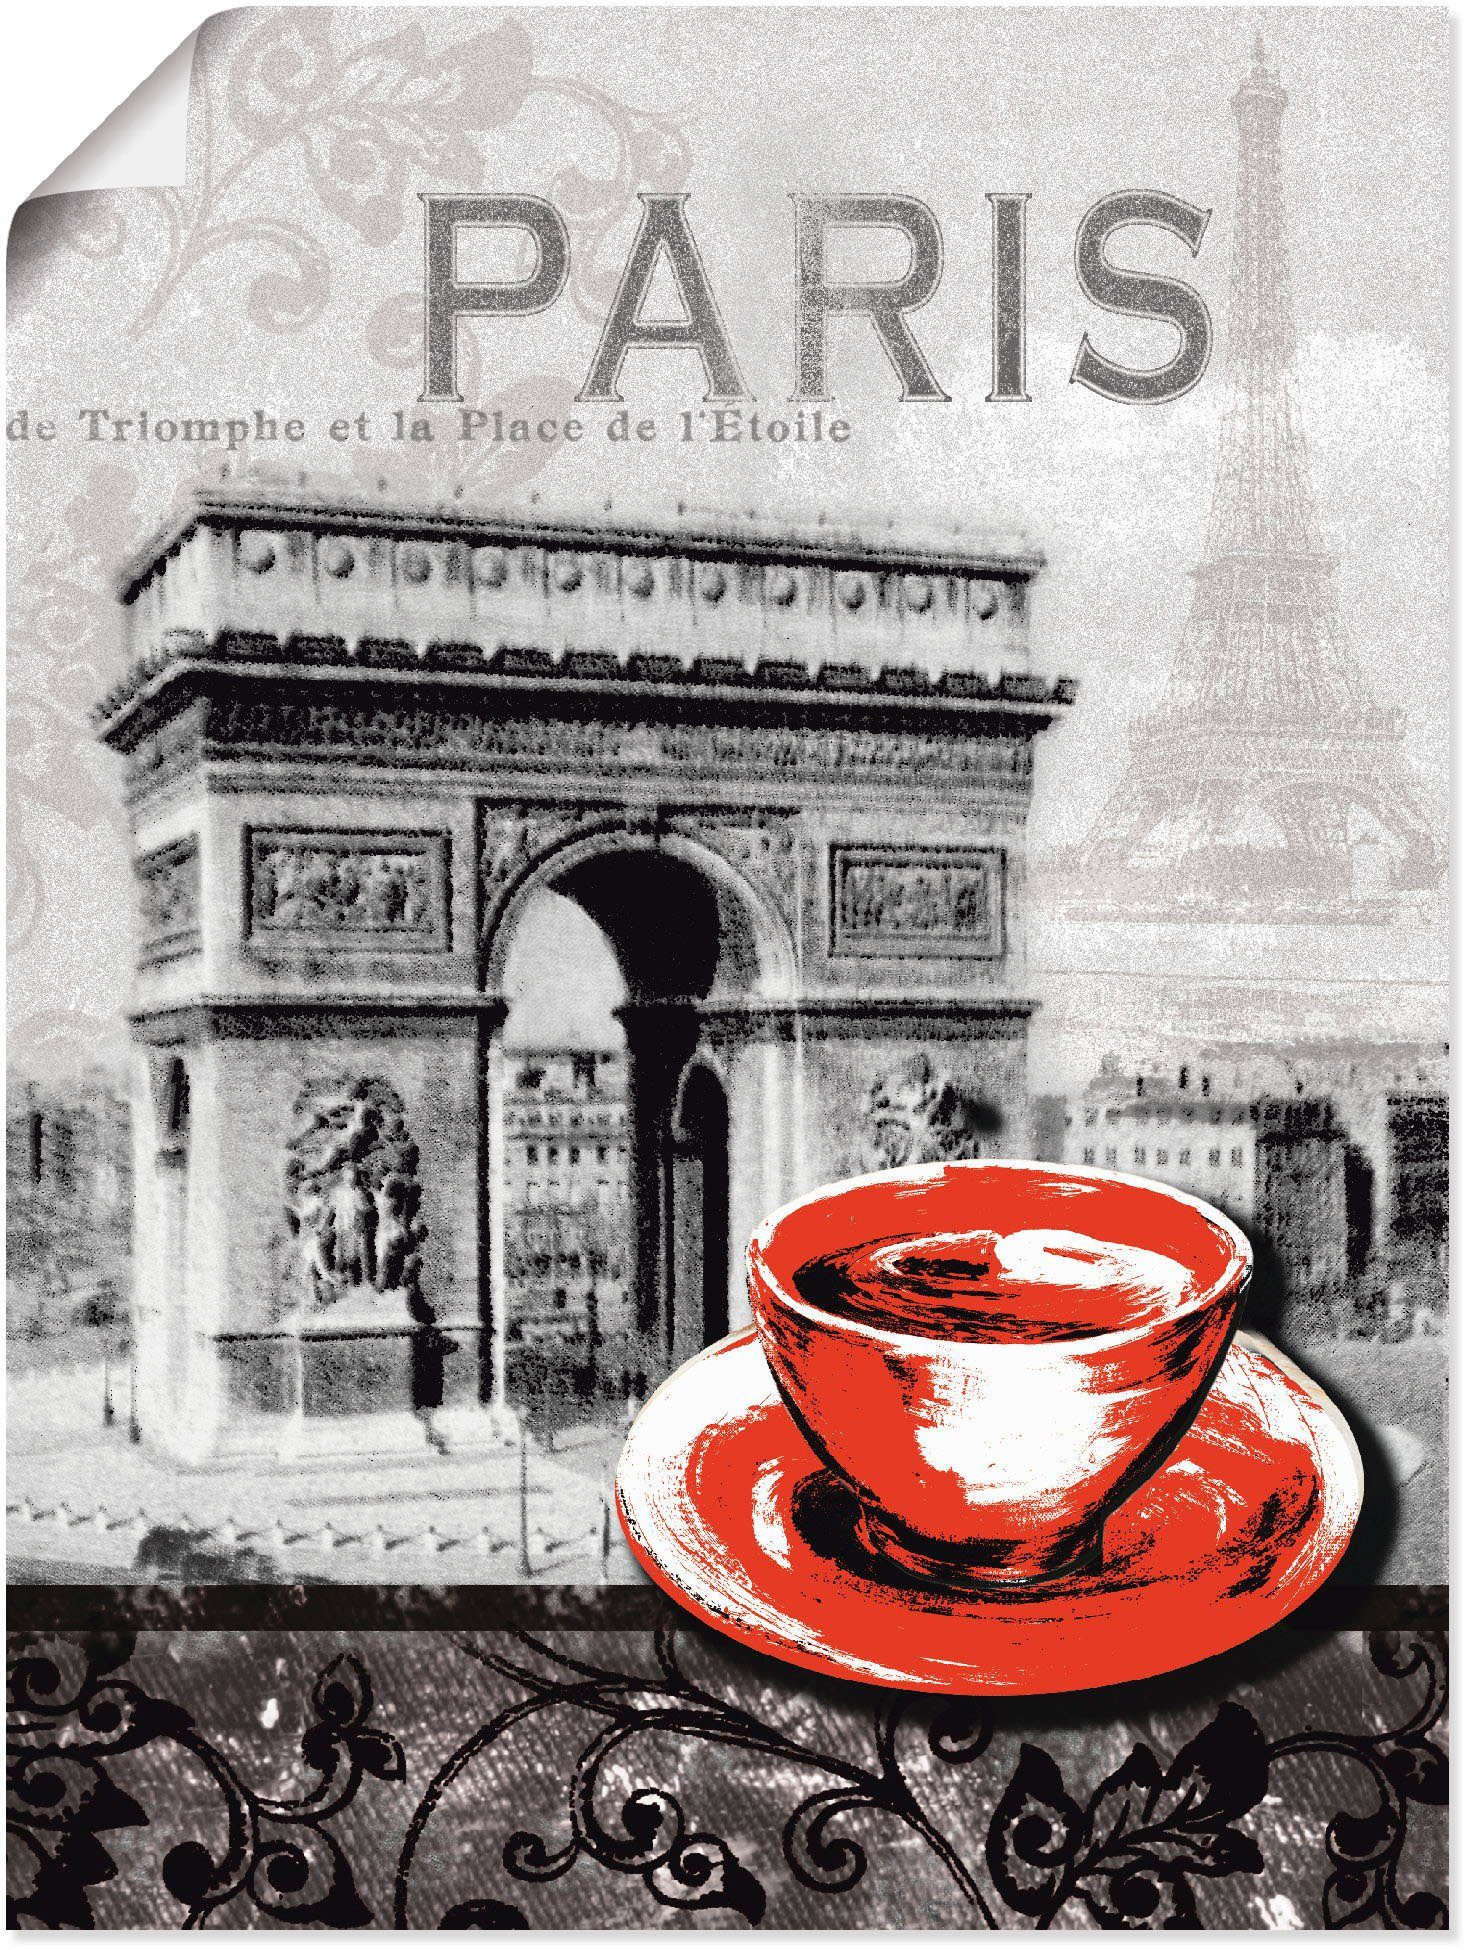 Café Alubild, Poster (1 Lait Gebäude in - Artland Paris - versch. Wandbild au Größen als Leinwandbild, oder Wandaufkleber St), Milchkaffee,